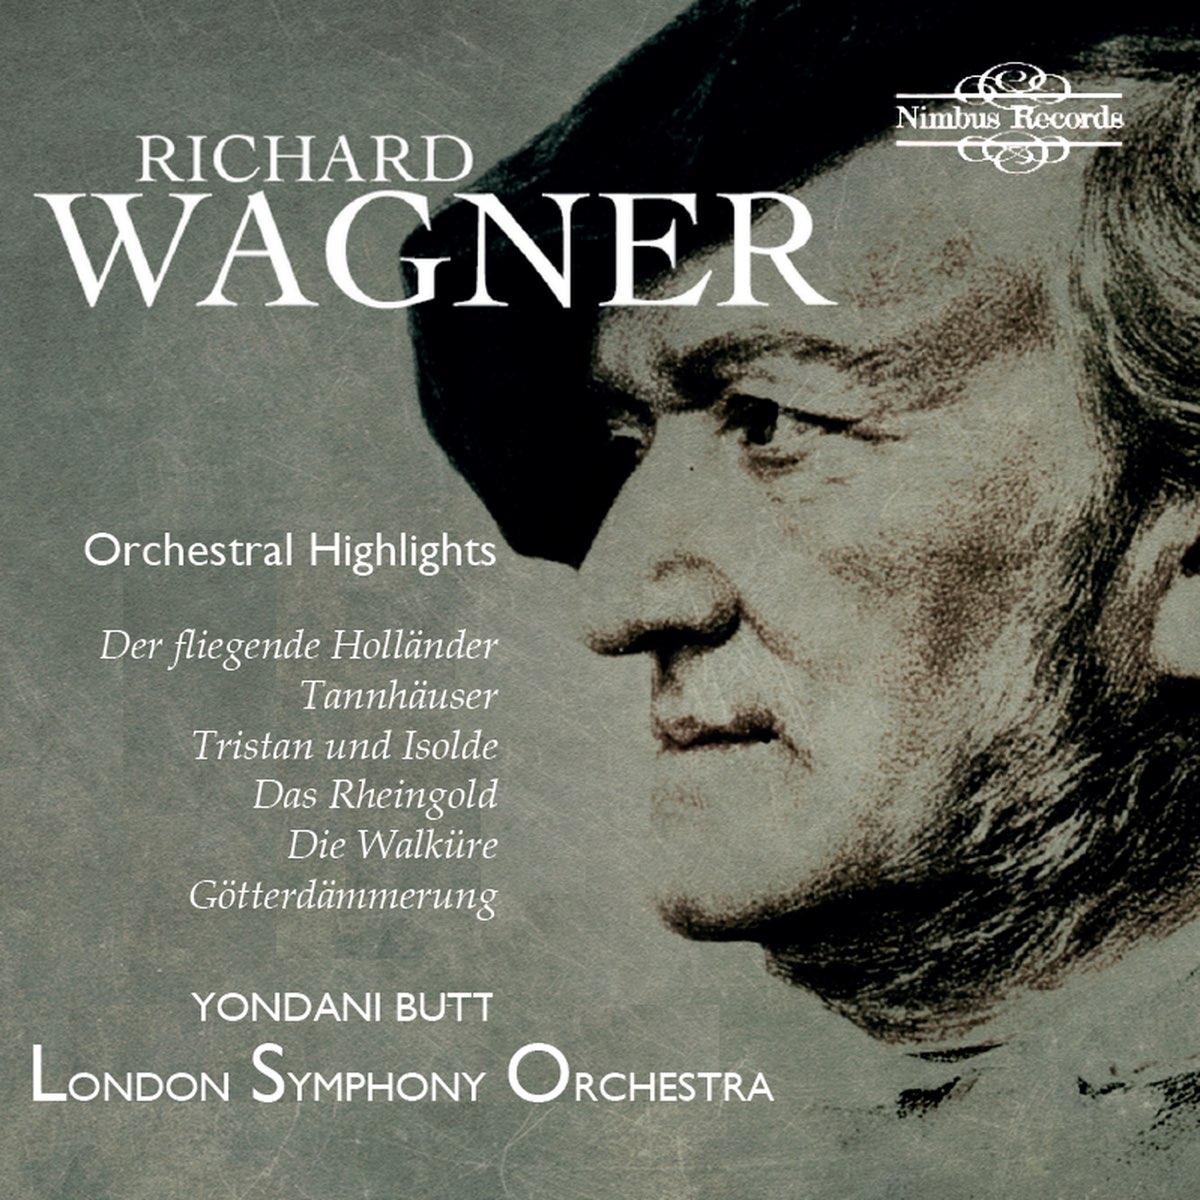 Wagner: Orchestral Highlights - Album by Yodani Butt, London Symphony  Orchestra & Yondani Butt - Apple Music